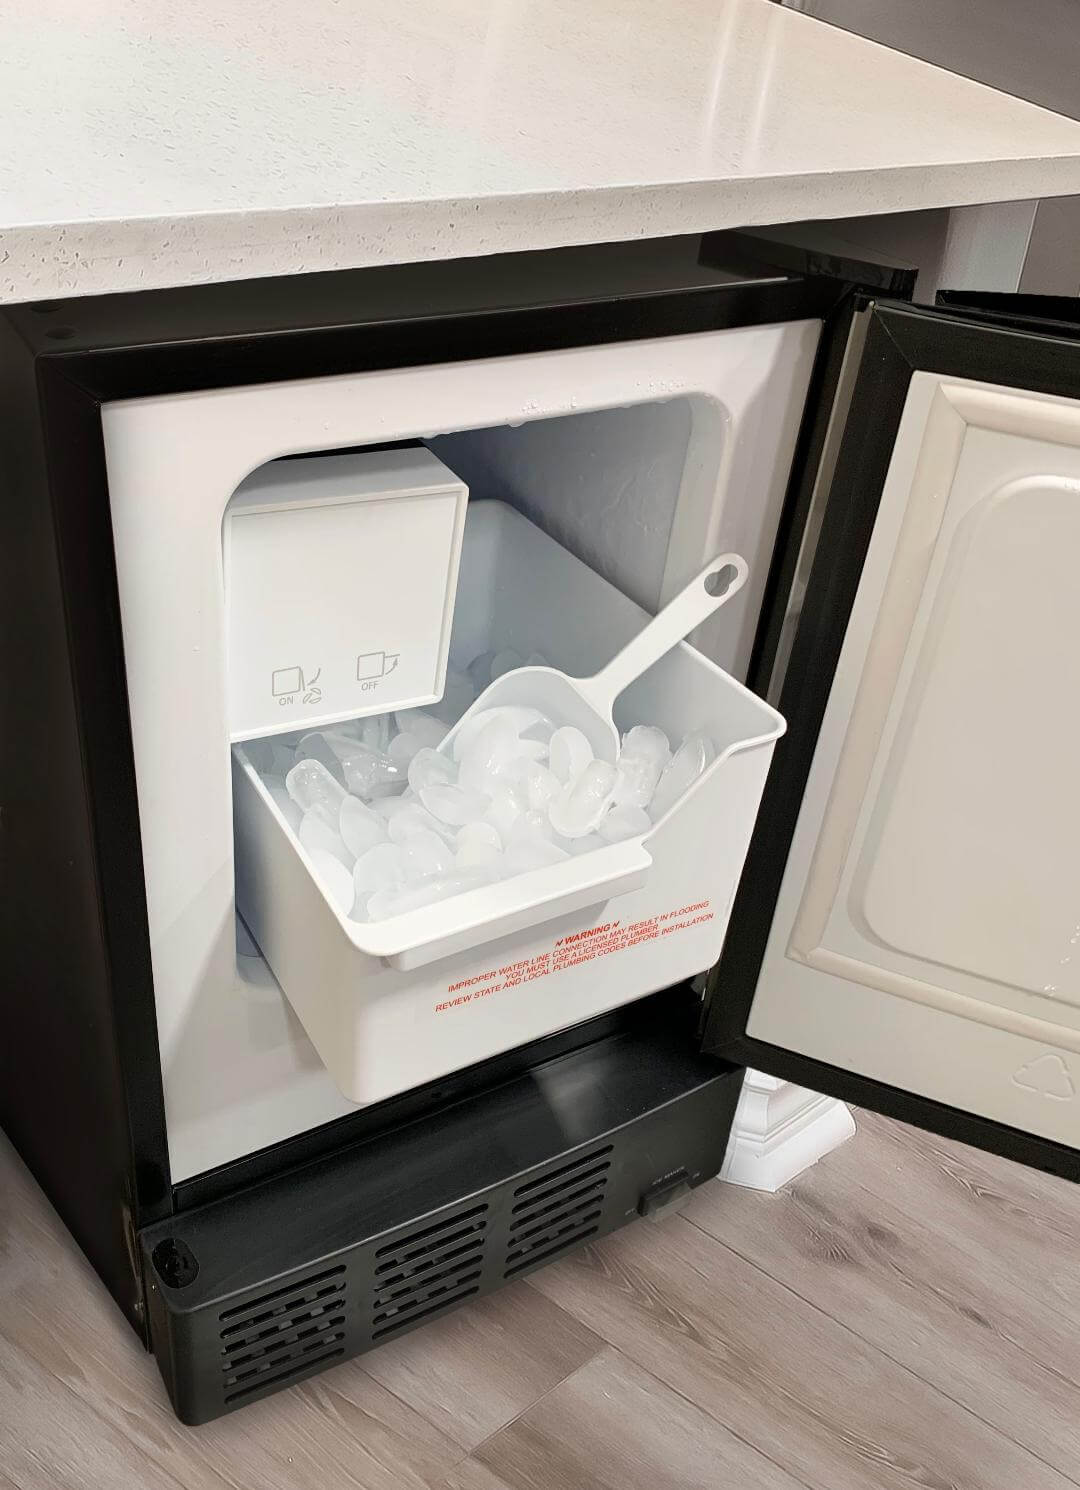 Will freezer still work properly if I remove ice maker? : r/Appliances